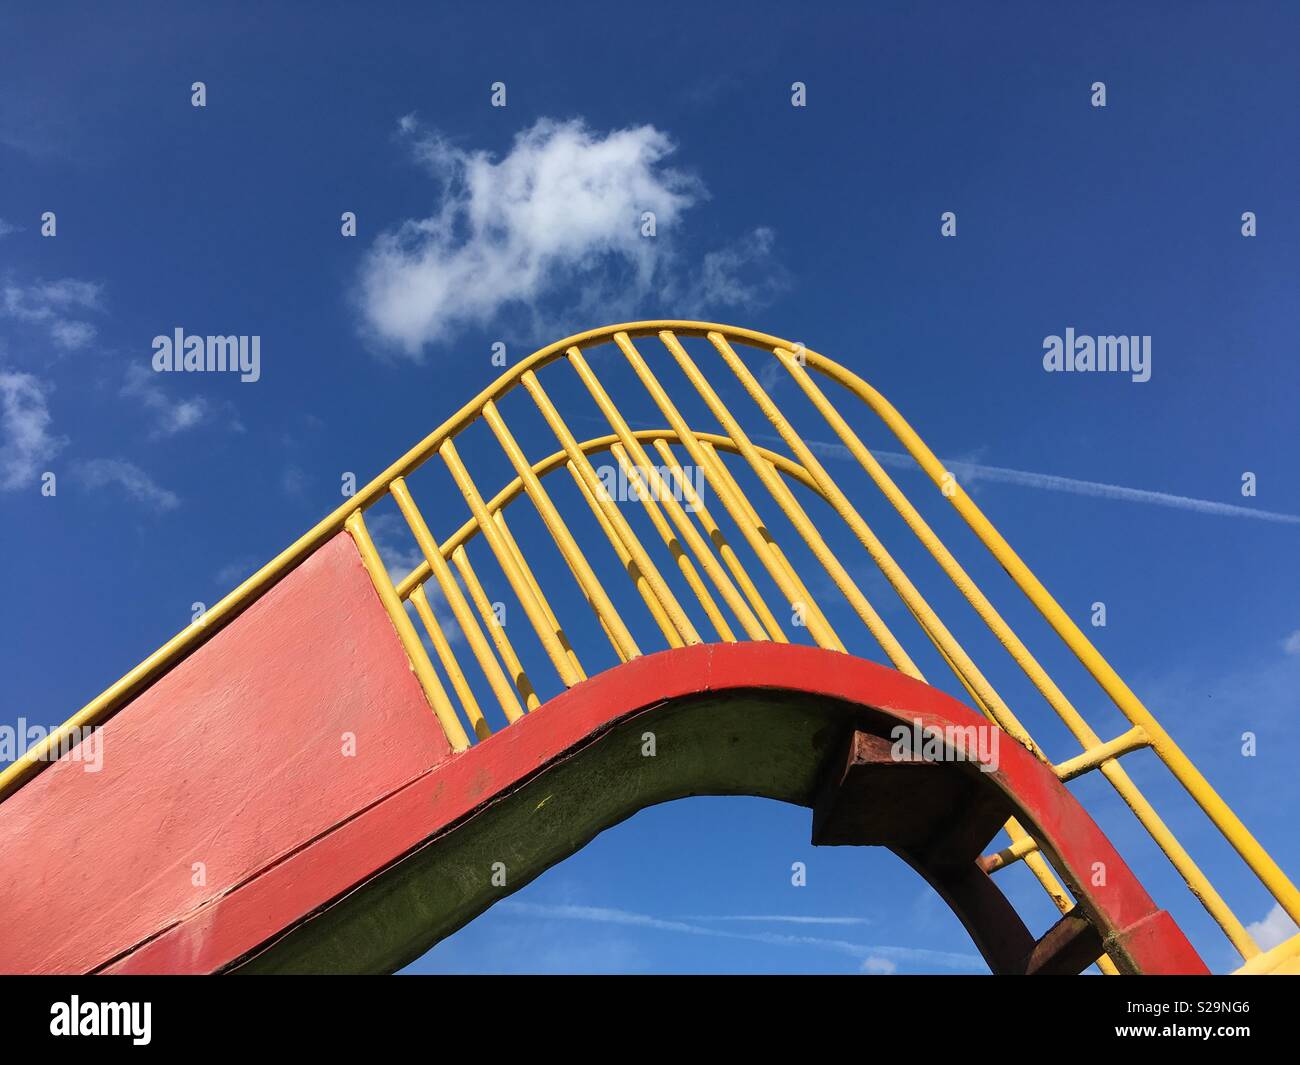 Slide in playground Stock Photo